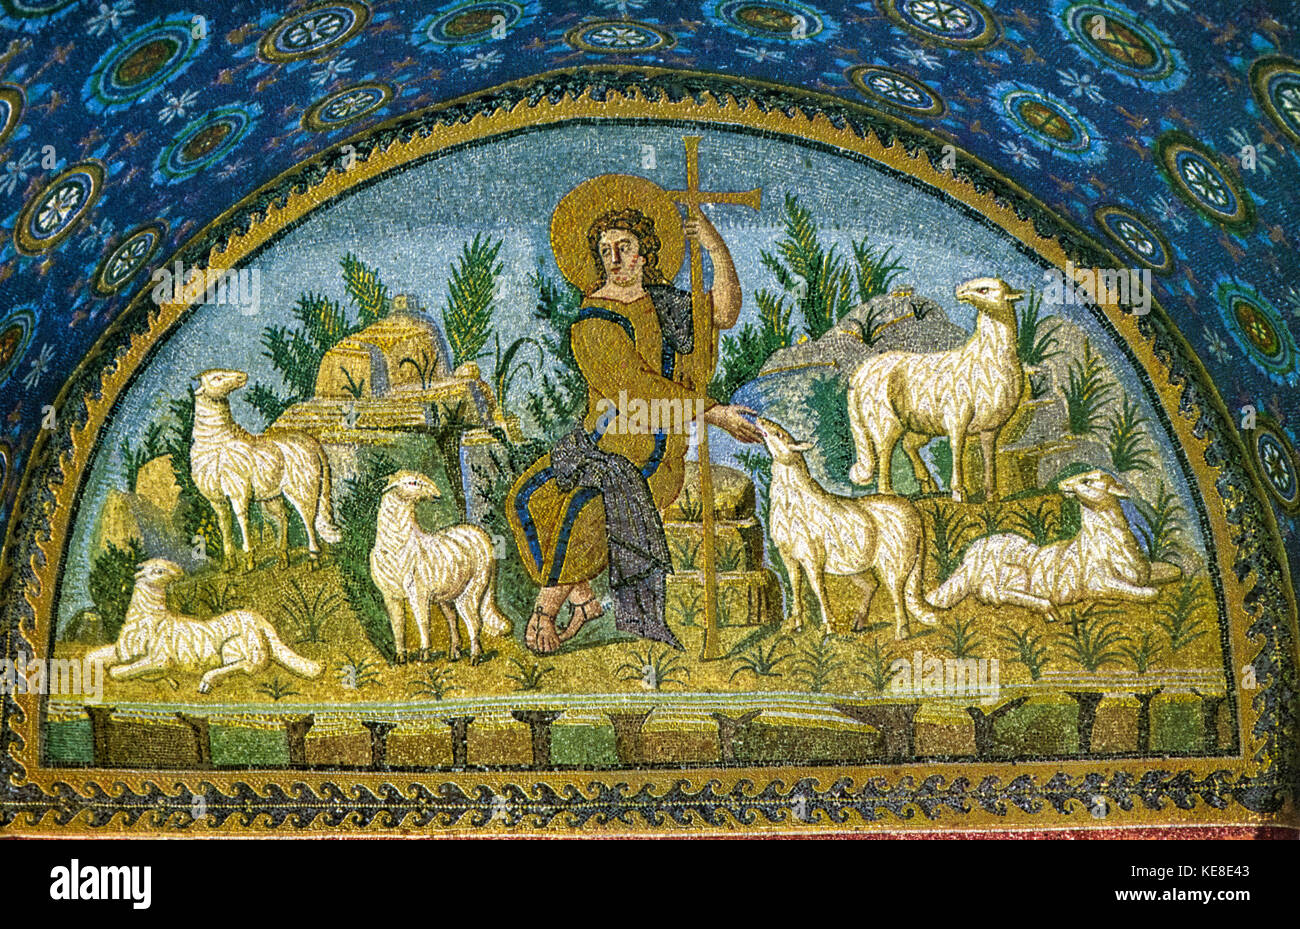 Italien Emilia Romagna ravenna Italien Emilia Romagna ravenna Mausoleum der Galla Placidia - Der gute Hirte Mosaik v° Jahrhundert Stockfoto